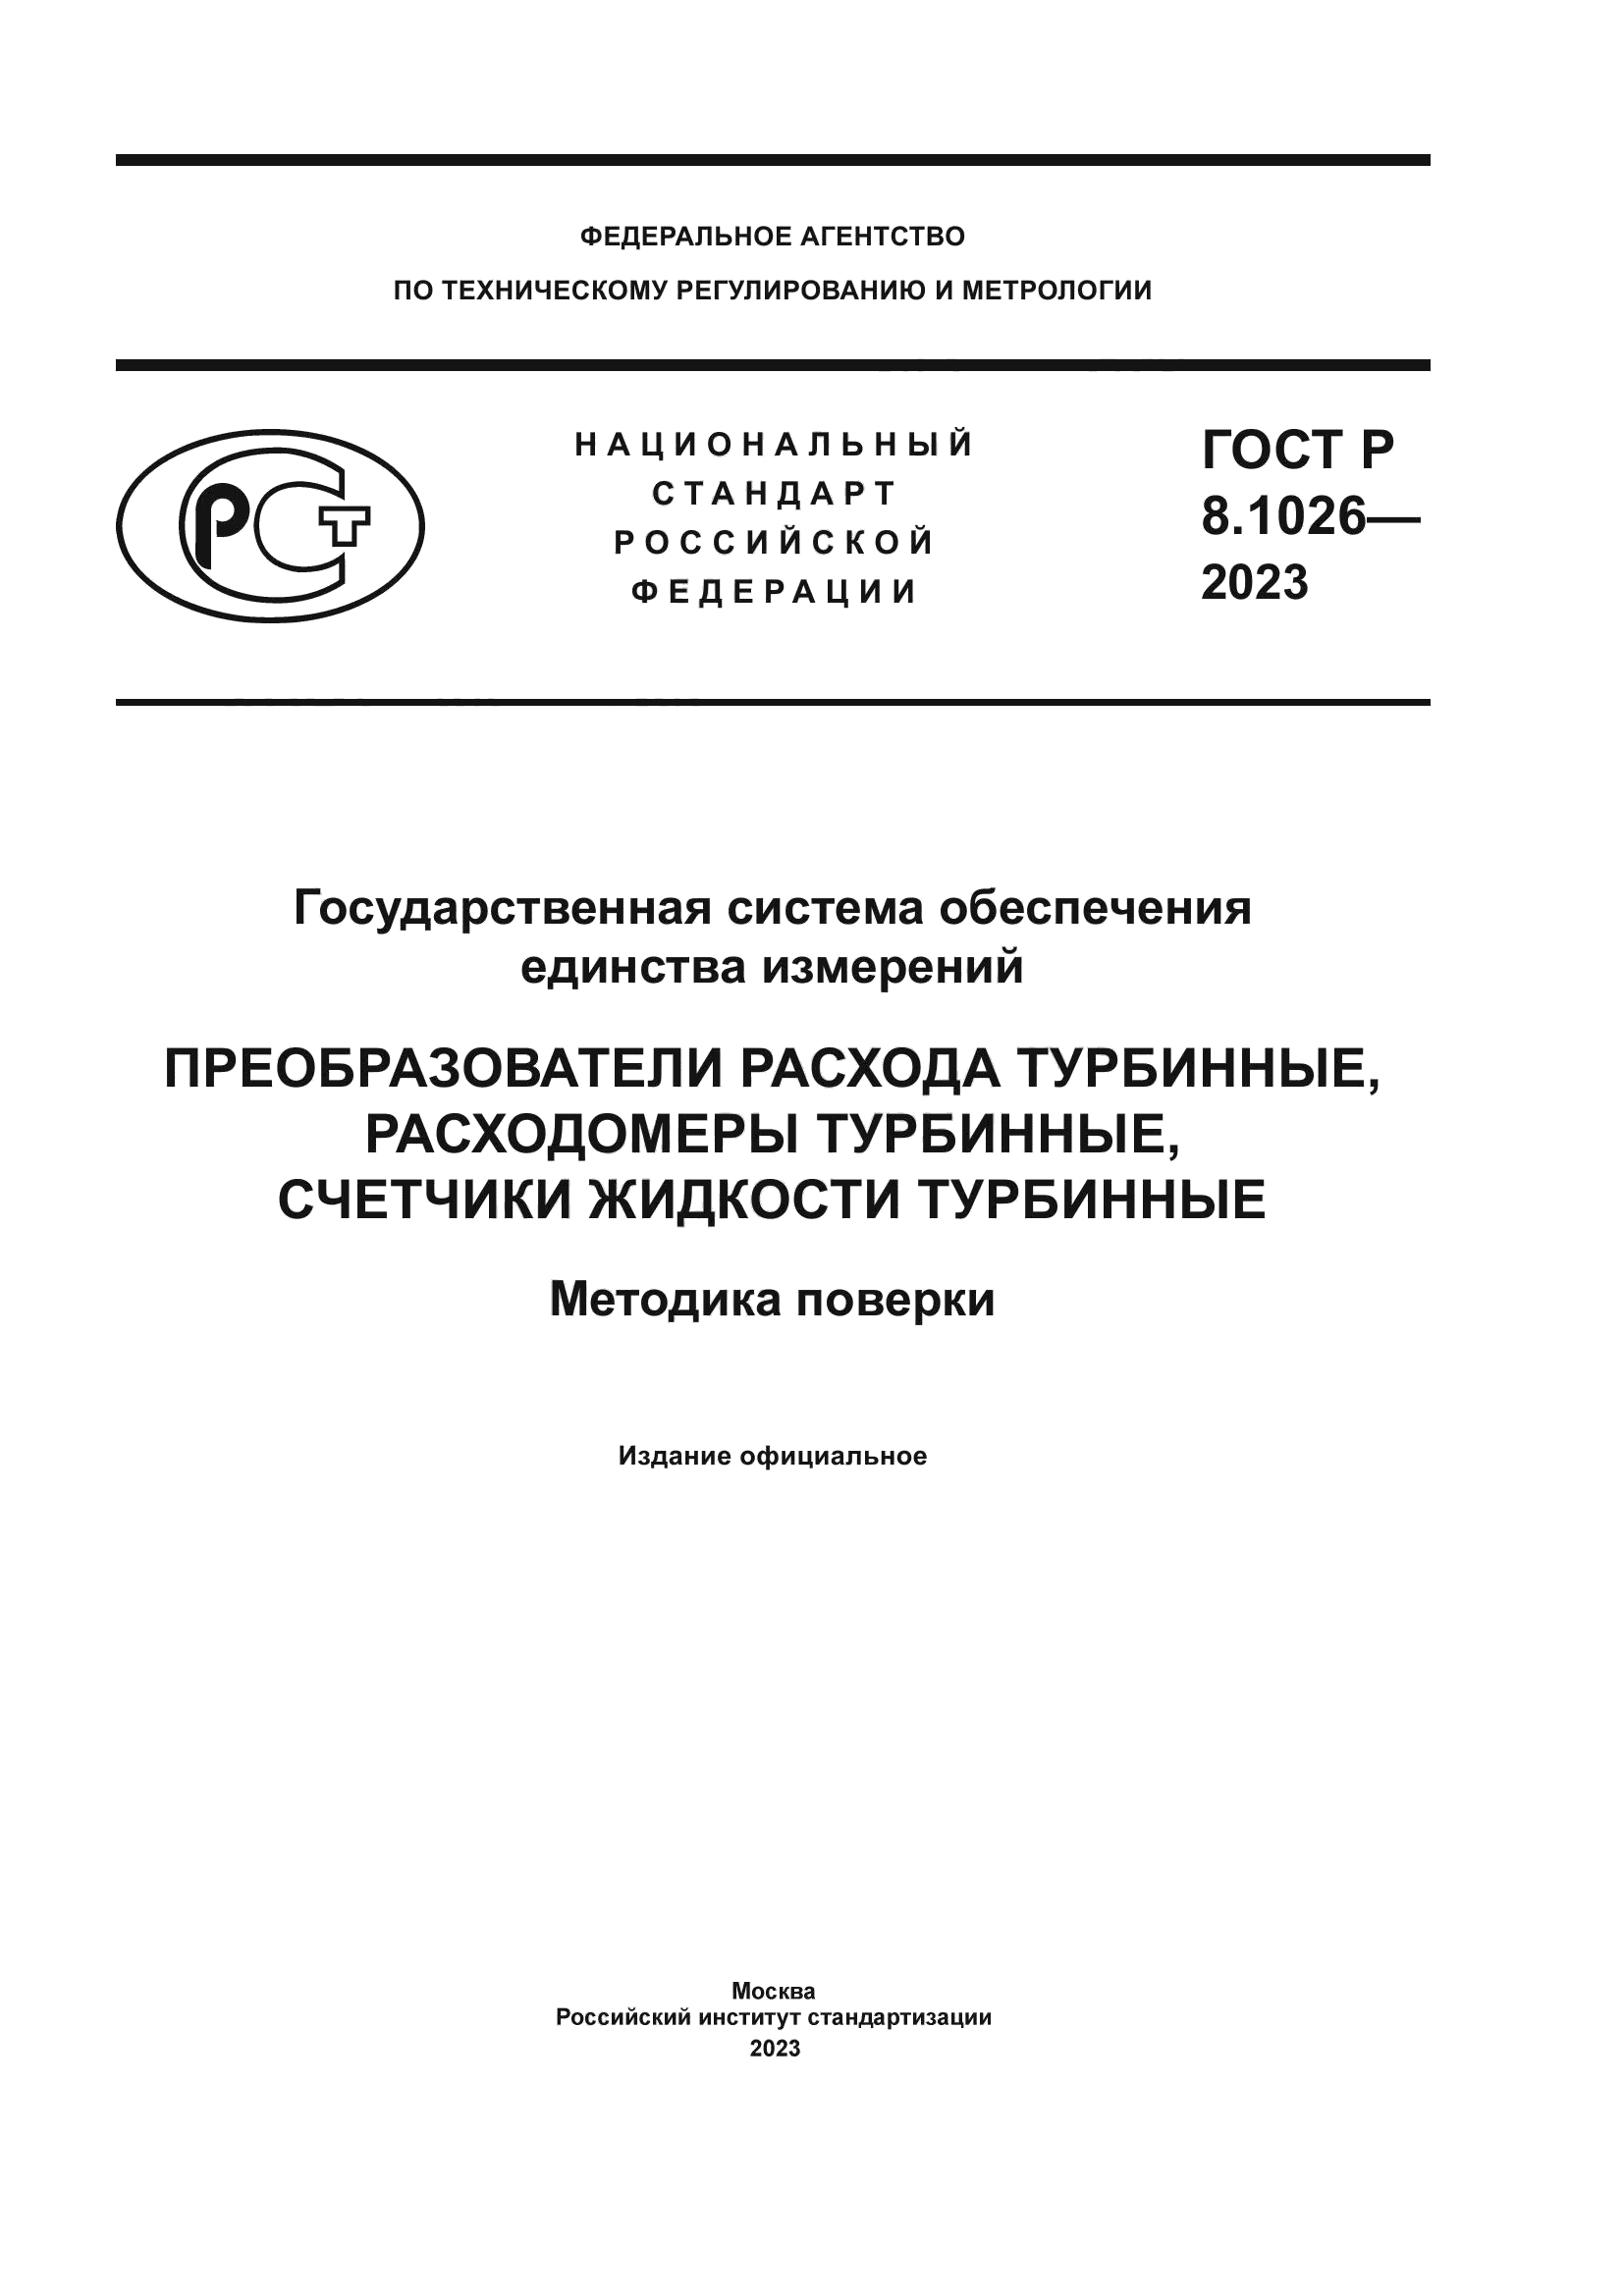 ГОСТ Р 8.1026-2023